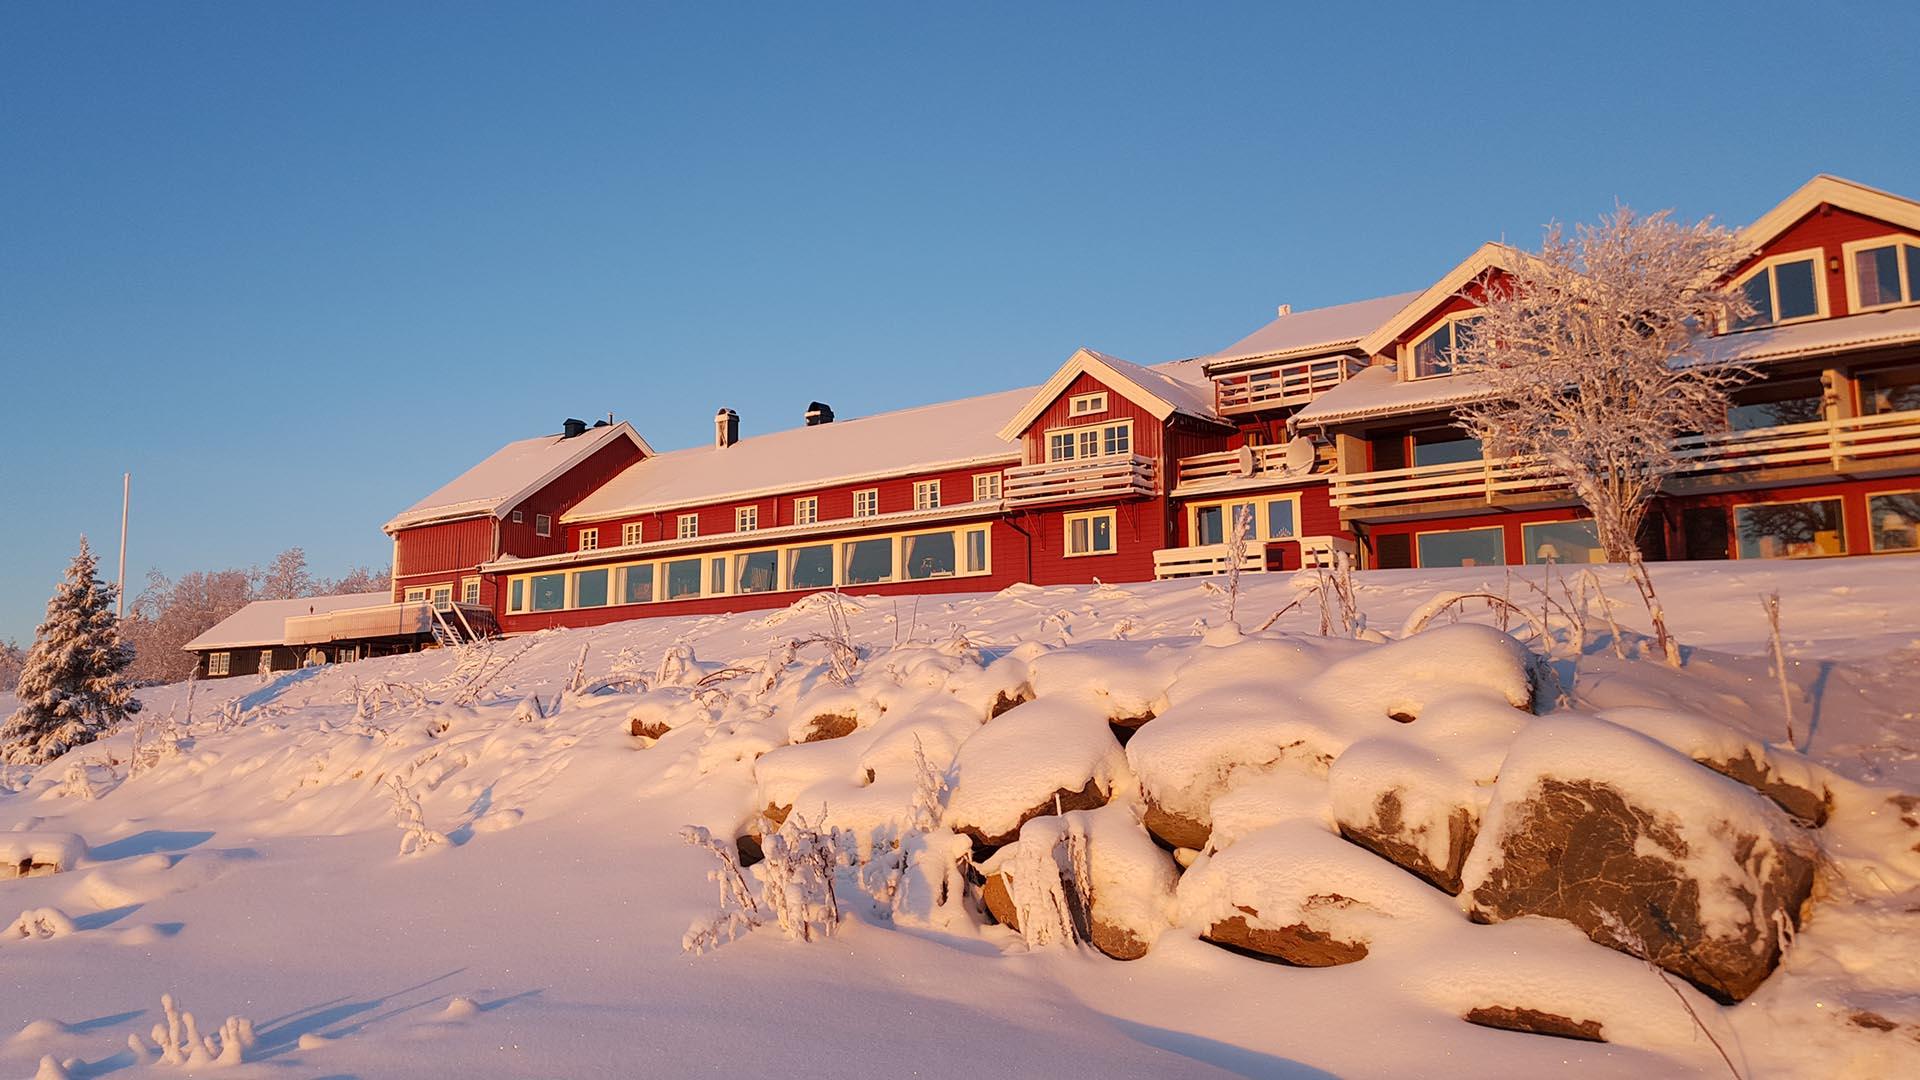 Rødt hotellbygg i varm vintersol med masse snø